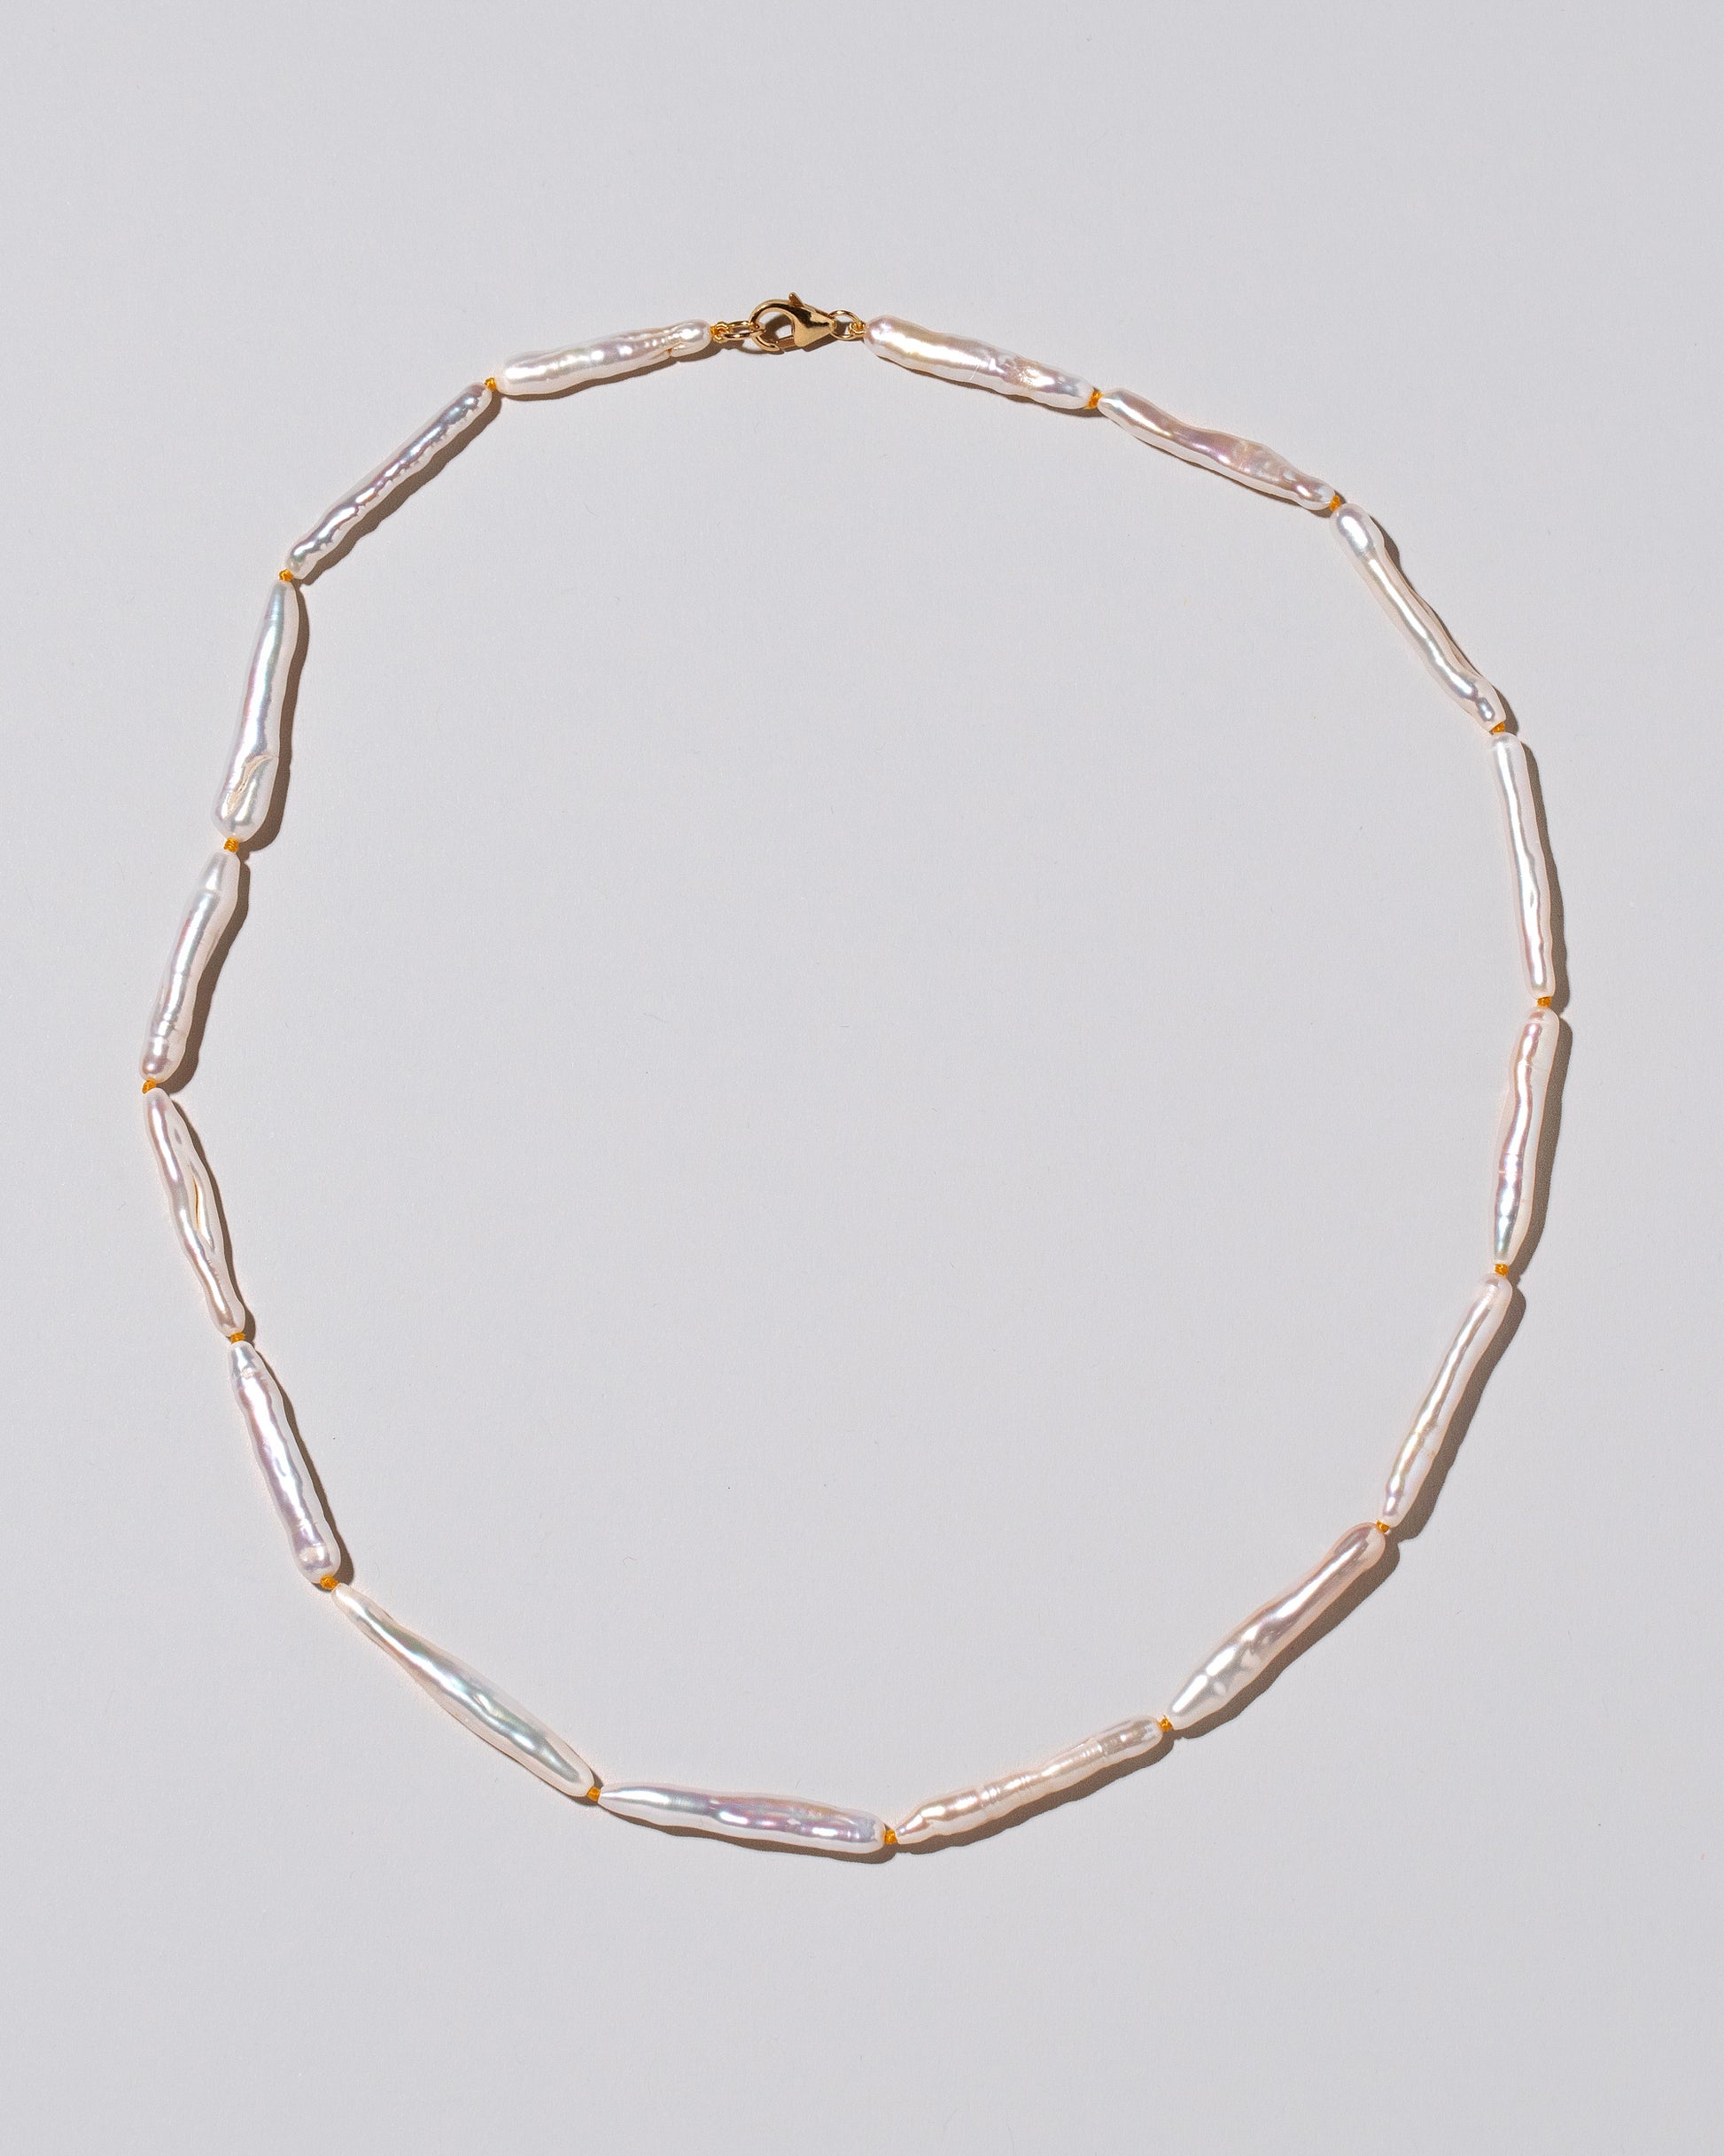 Stick Pearl Strand Necklace on light color background.